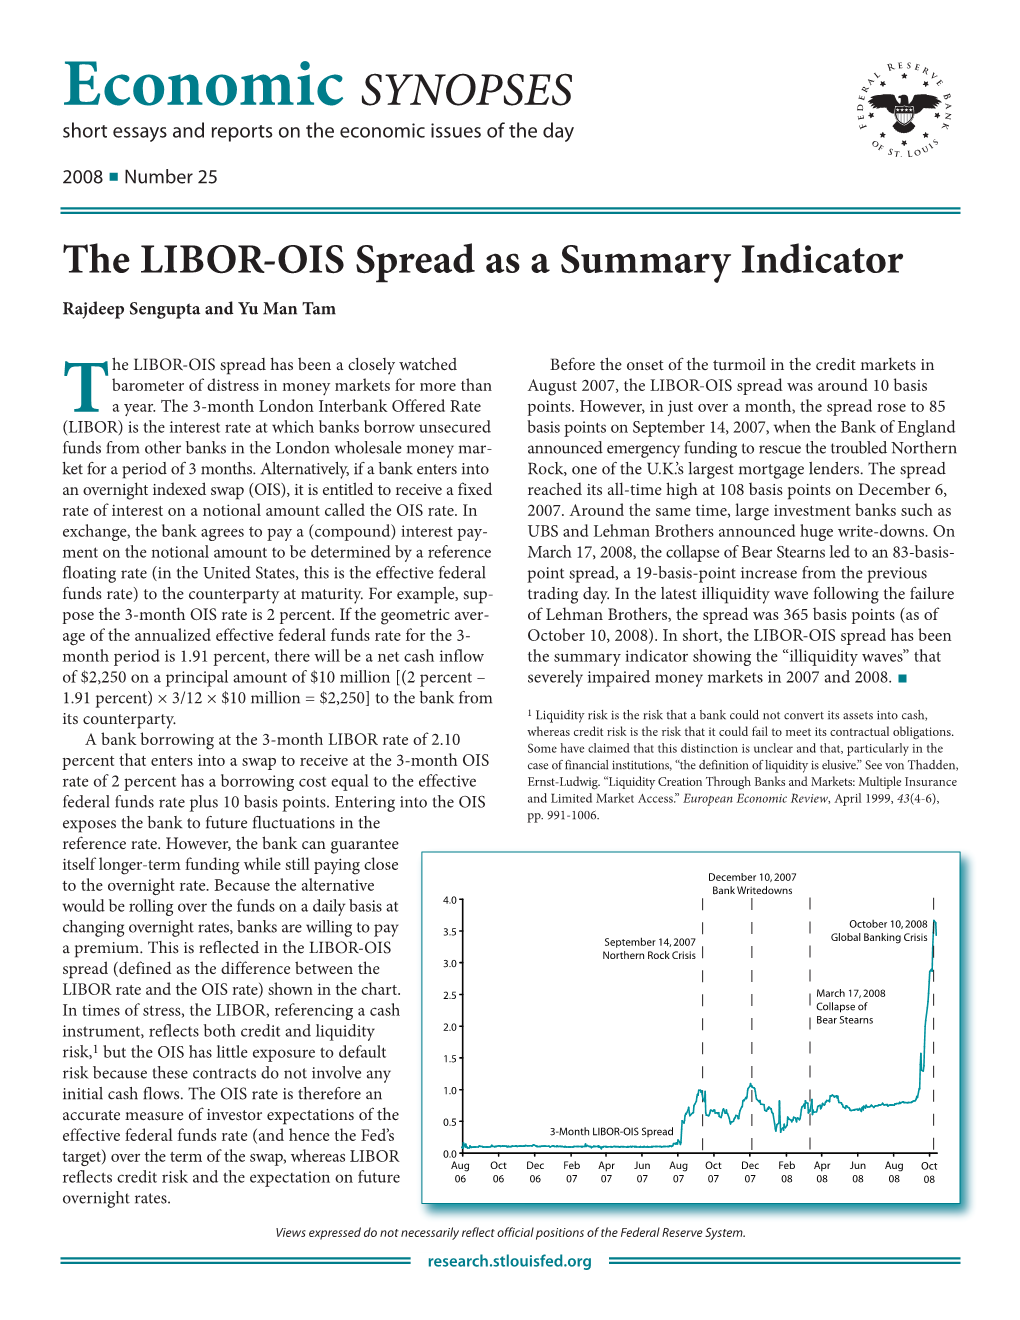 The LIBOR-OIS Spread As a Summary Indicator Rajdeep Sengupta and Yu Man Tam